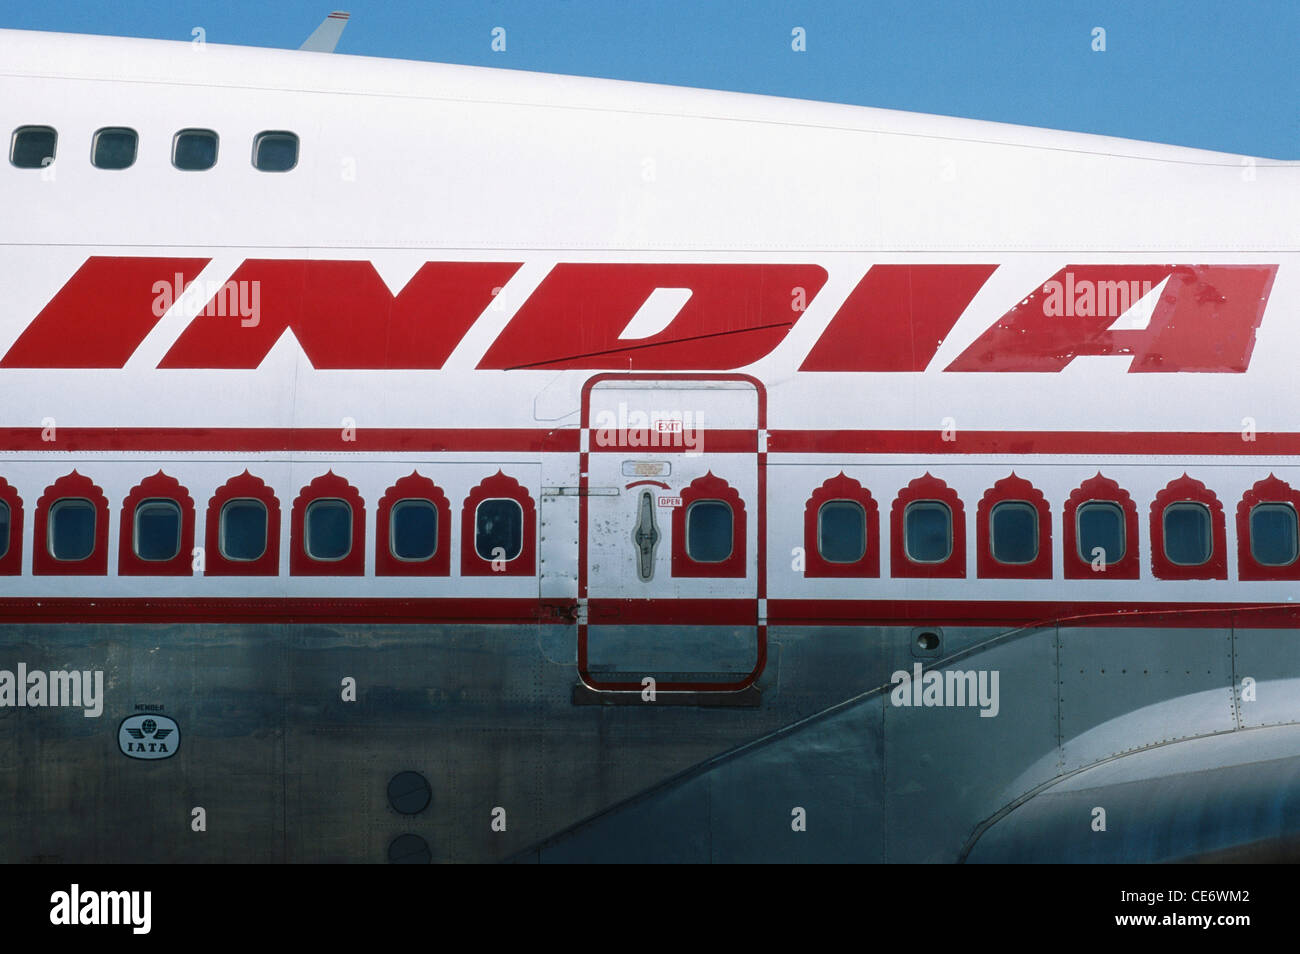 Fenêtres d'Air India boeing 747 Aircraft sahar Airport bombay mumbai maharashtra India indian Aircraft Banque D'Images